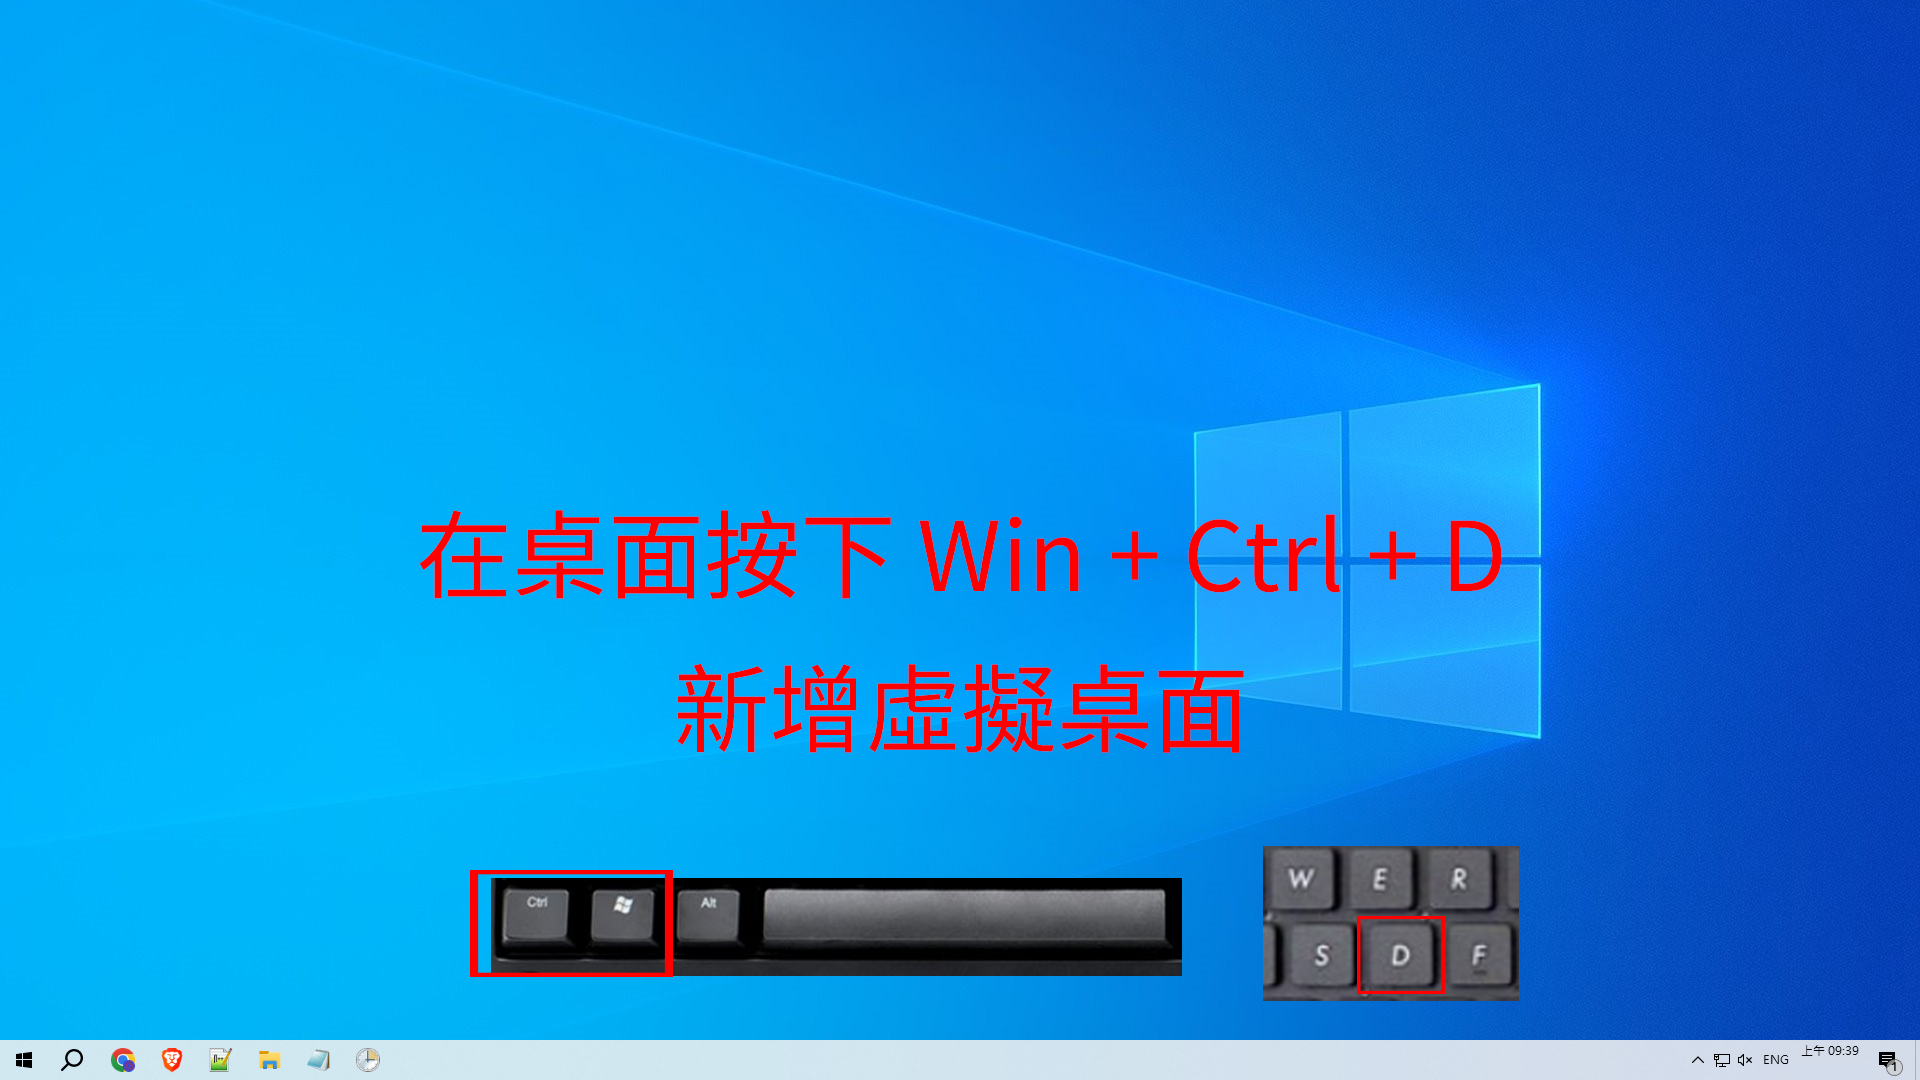 001 Win + Ctrl + D